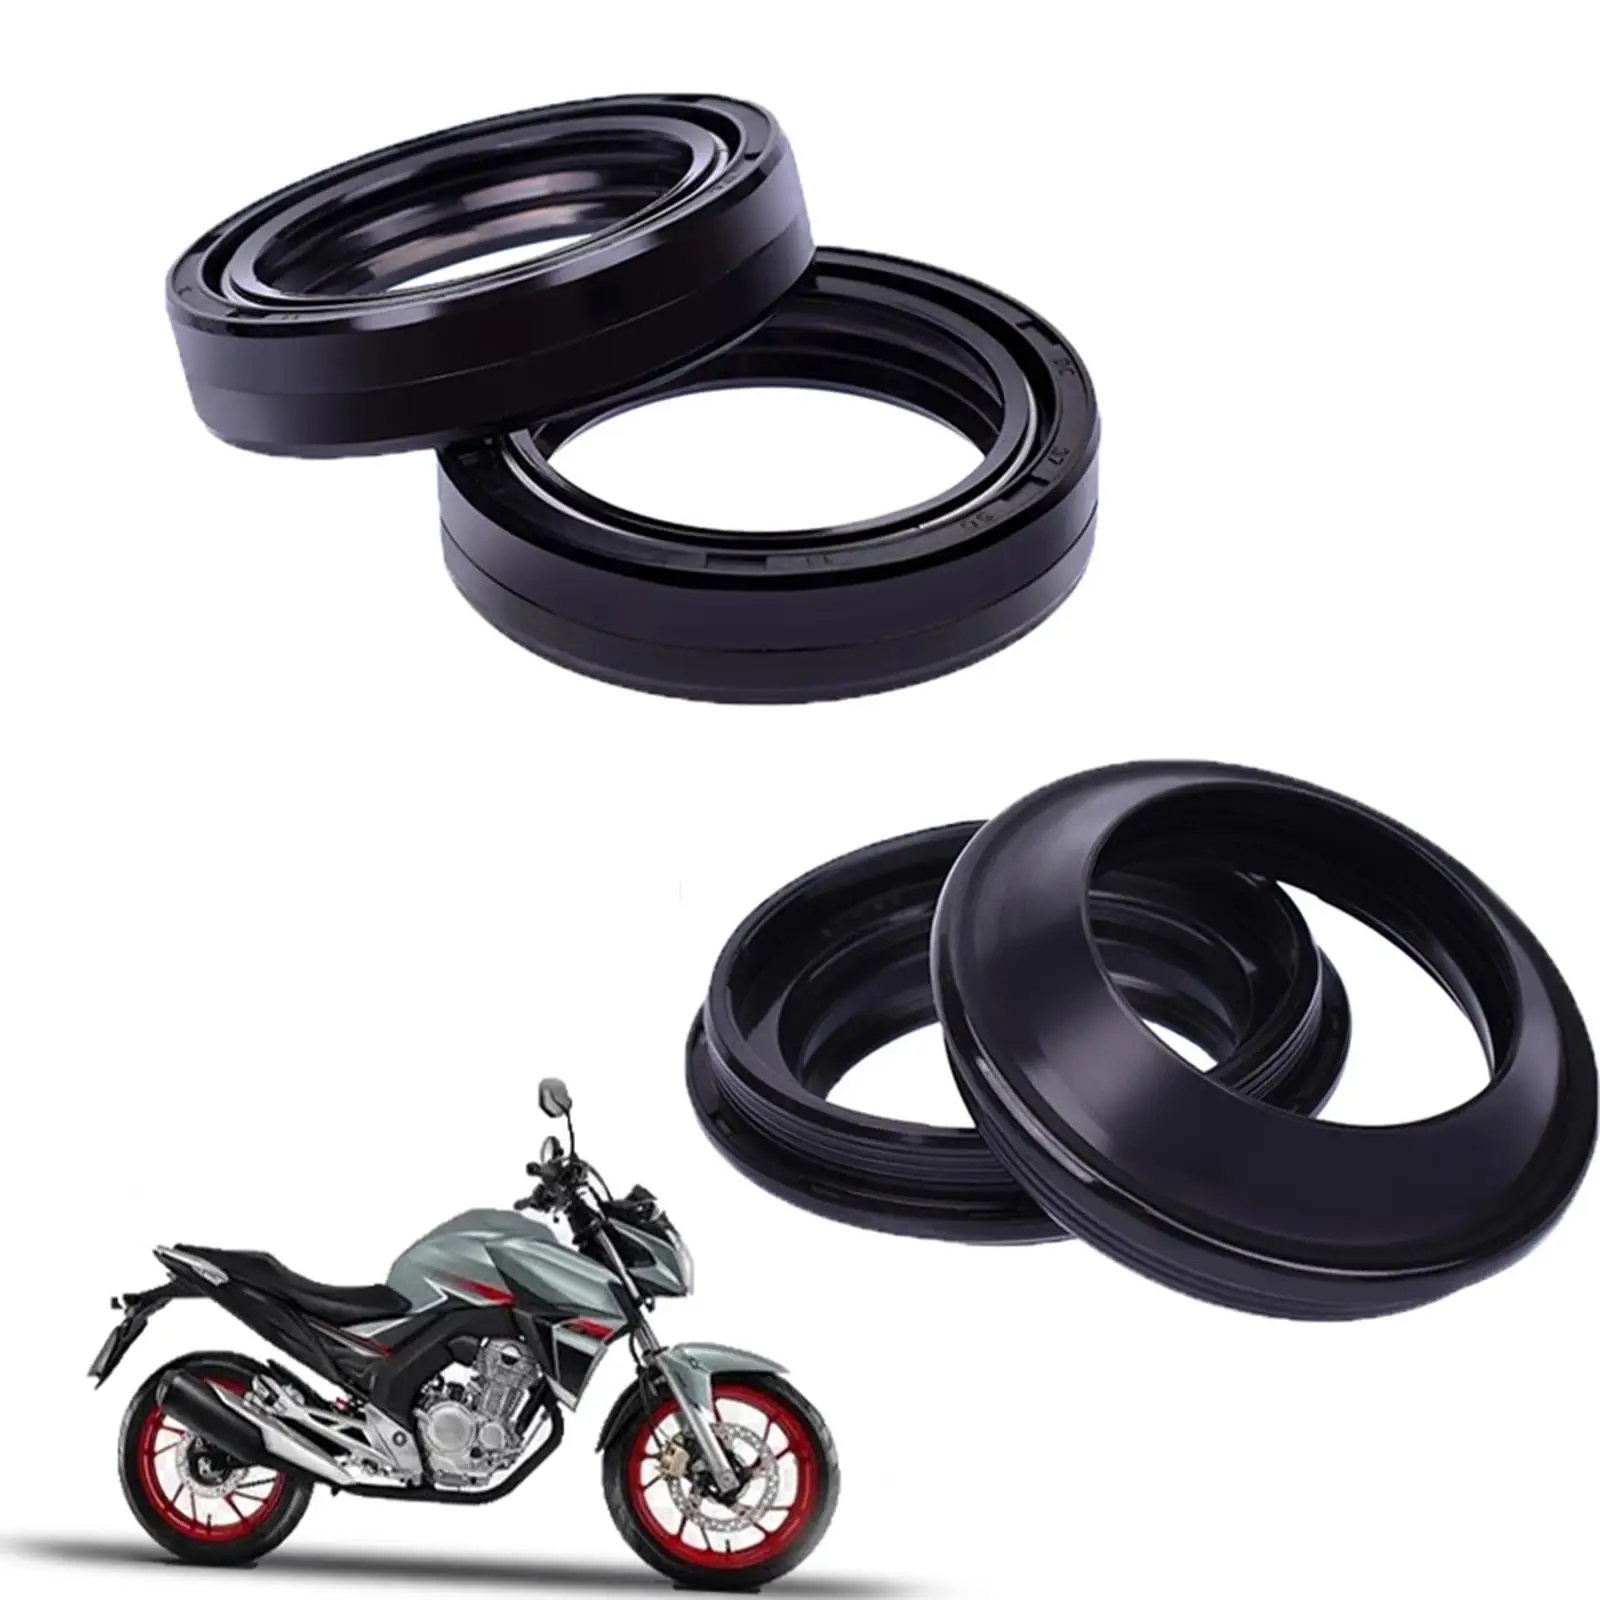 Motorcycle Front Shock Absorber Oil Seals Set for Honda CBR250RA CR80R